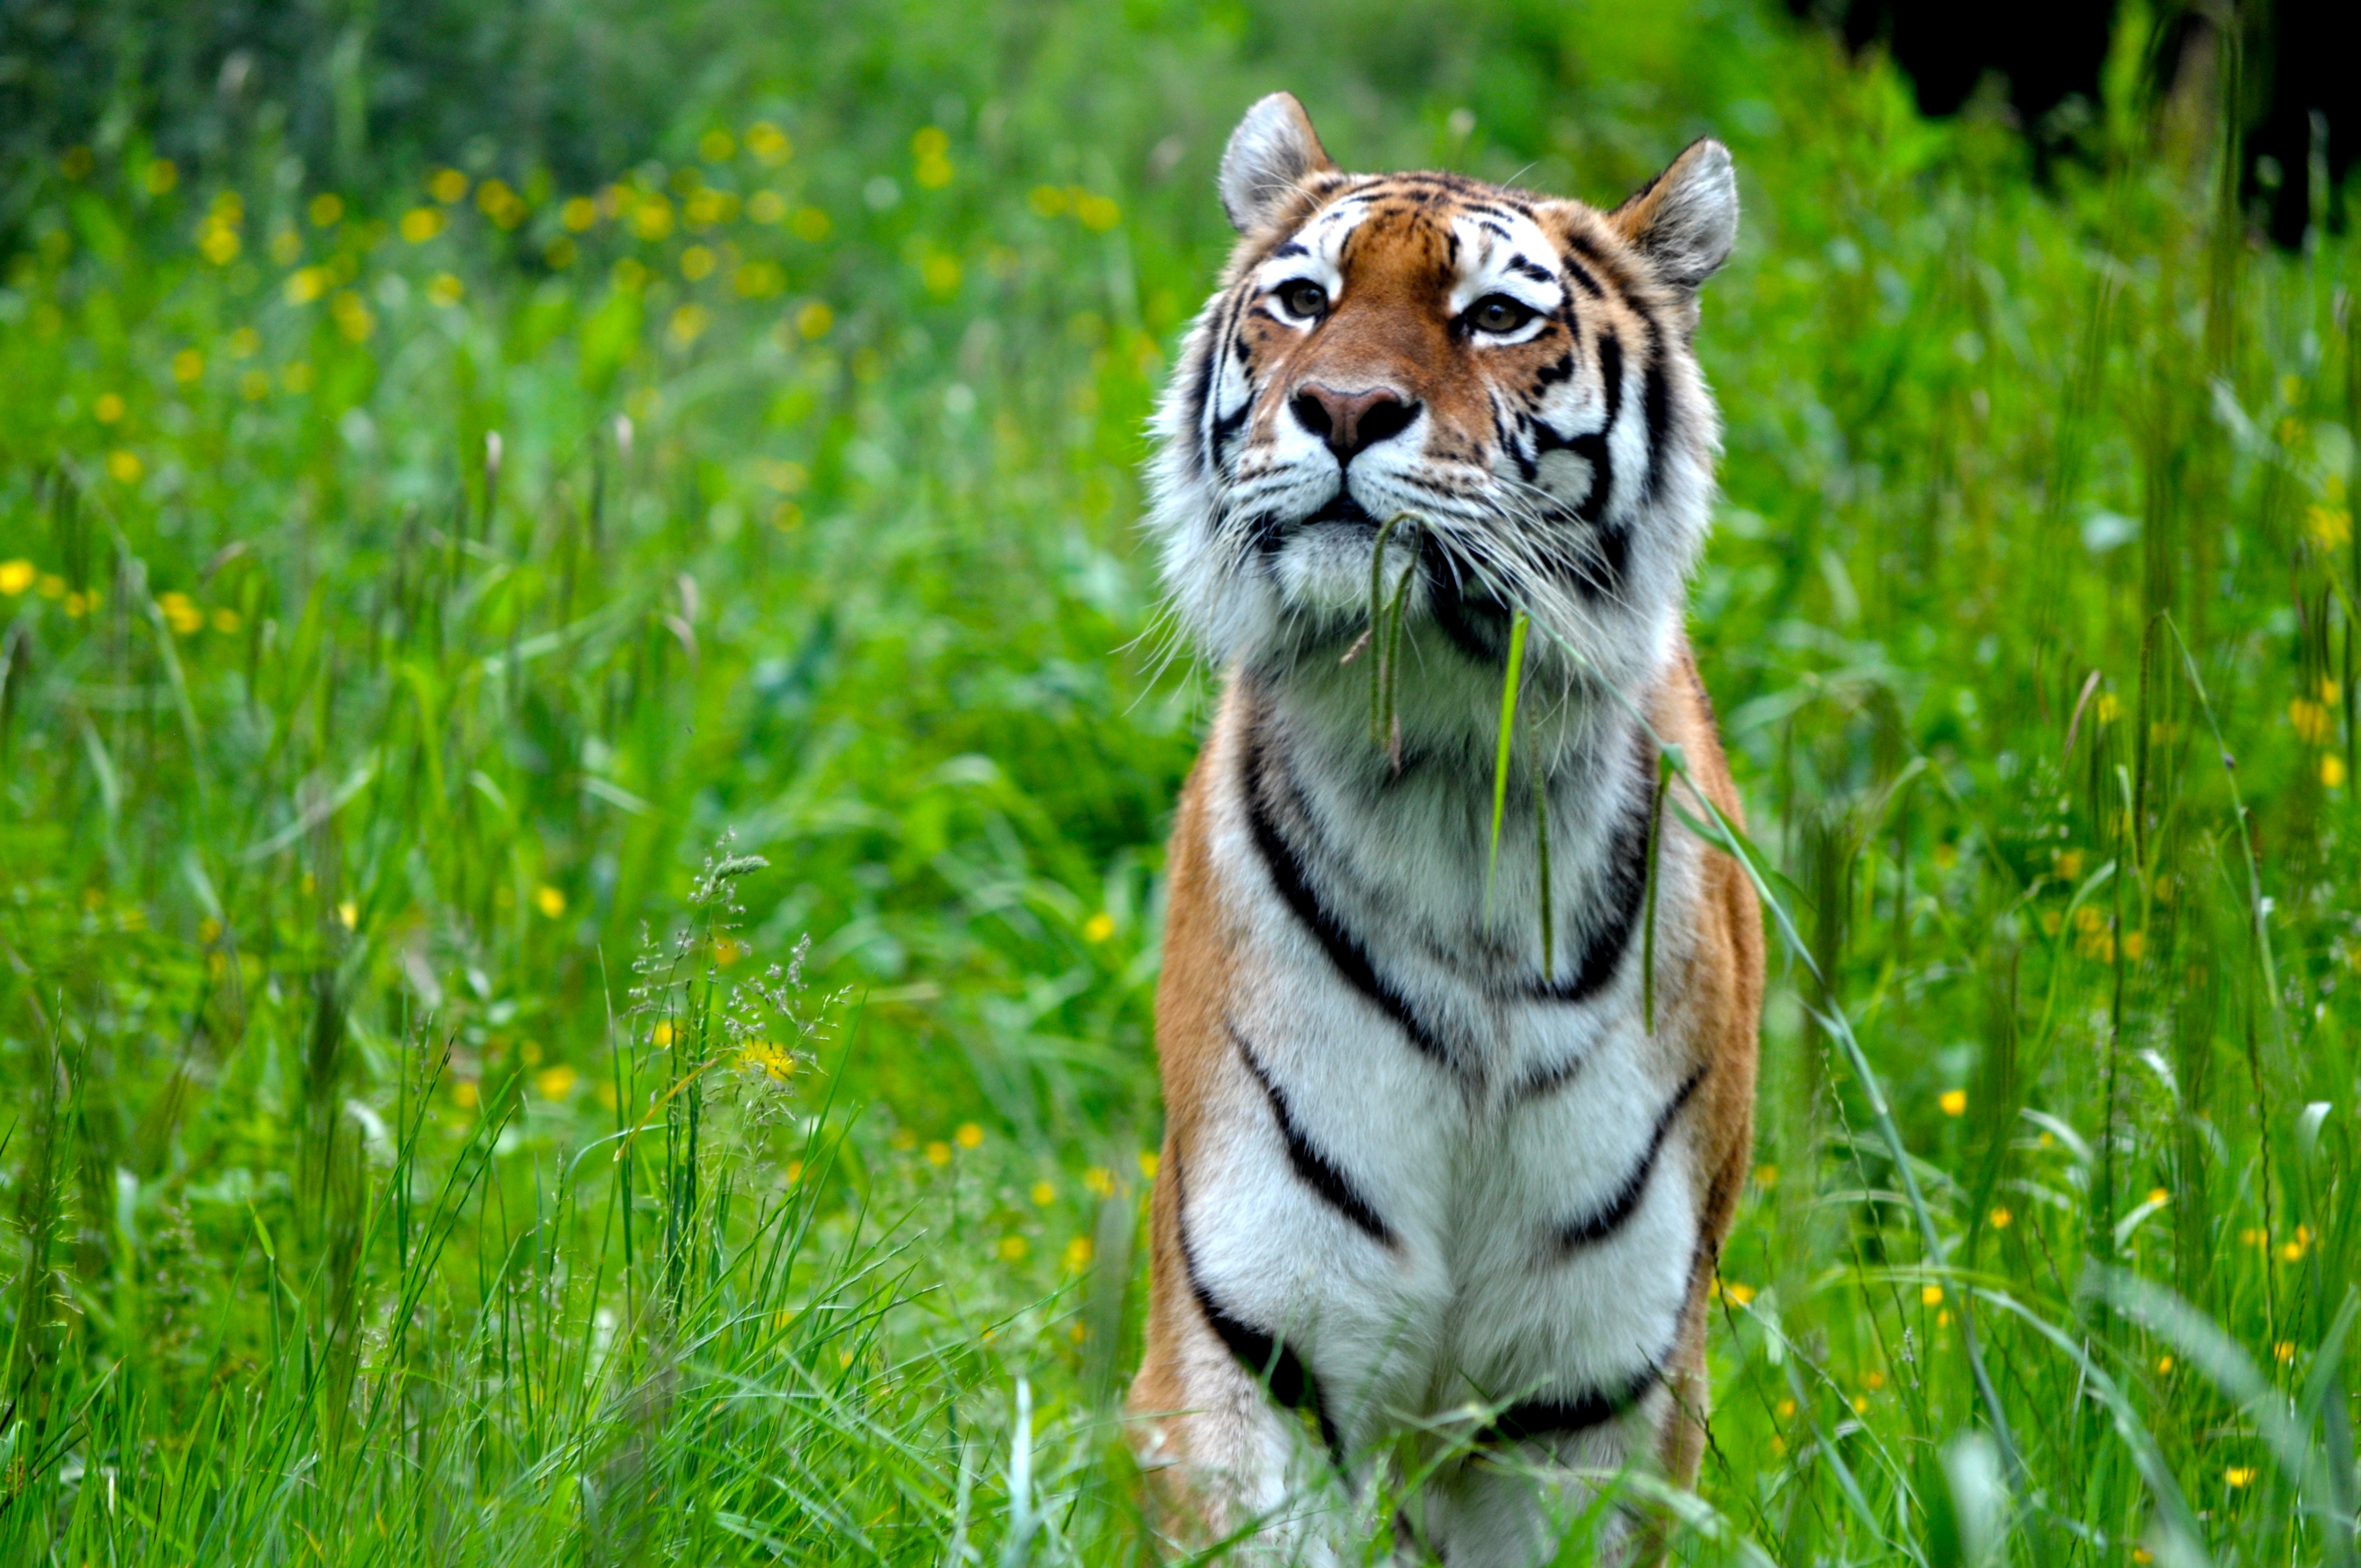 101941 descargar imagen animales, rayas, depredador, gato grande, tigre, tiras: fondos de pantalla y protectores de pantalla gratis